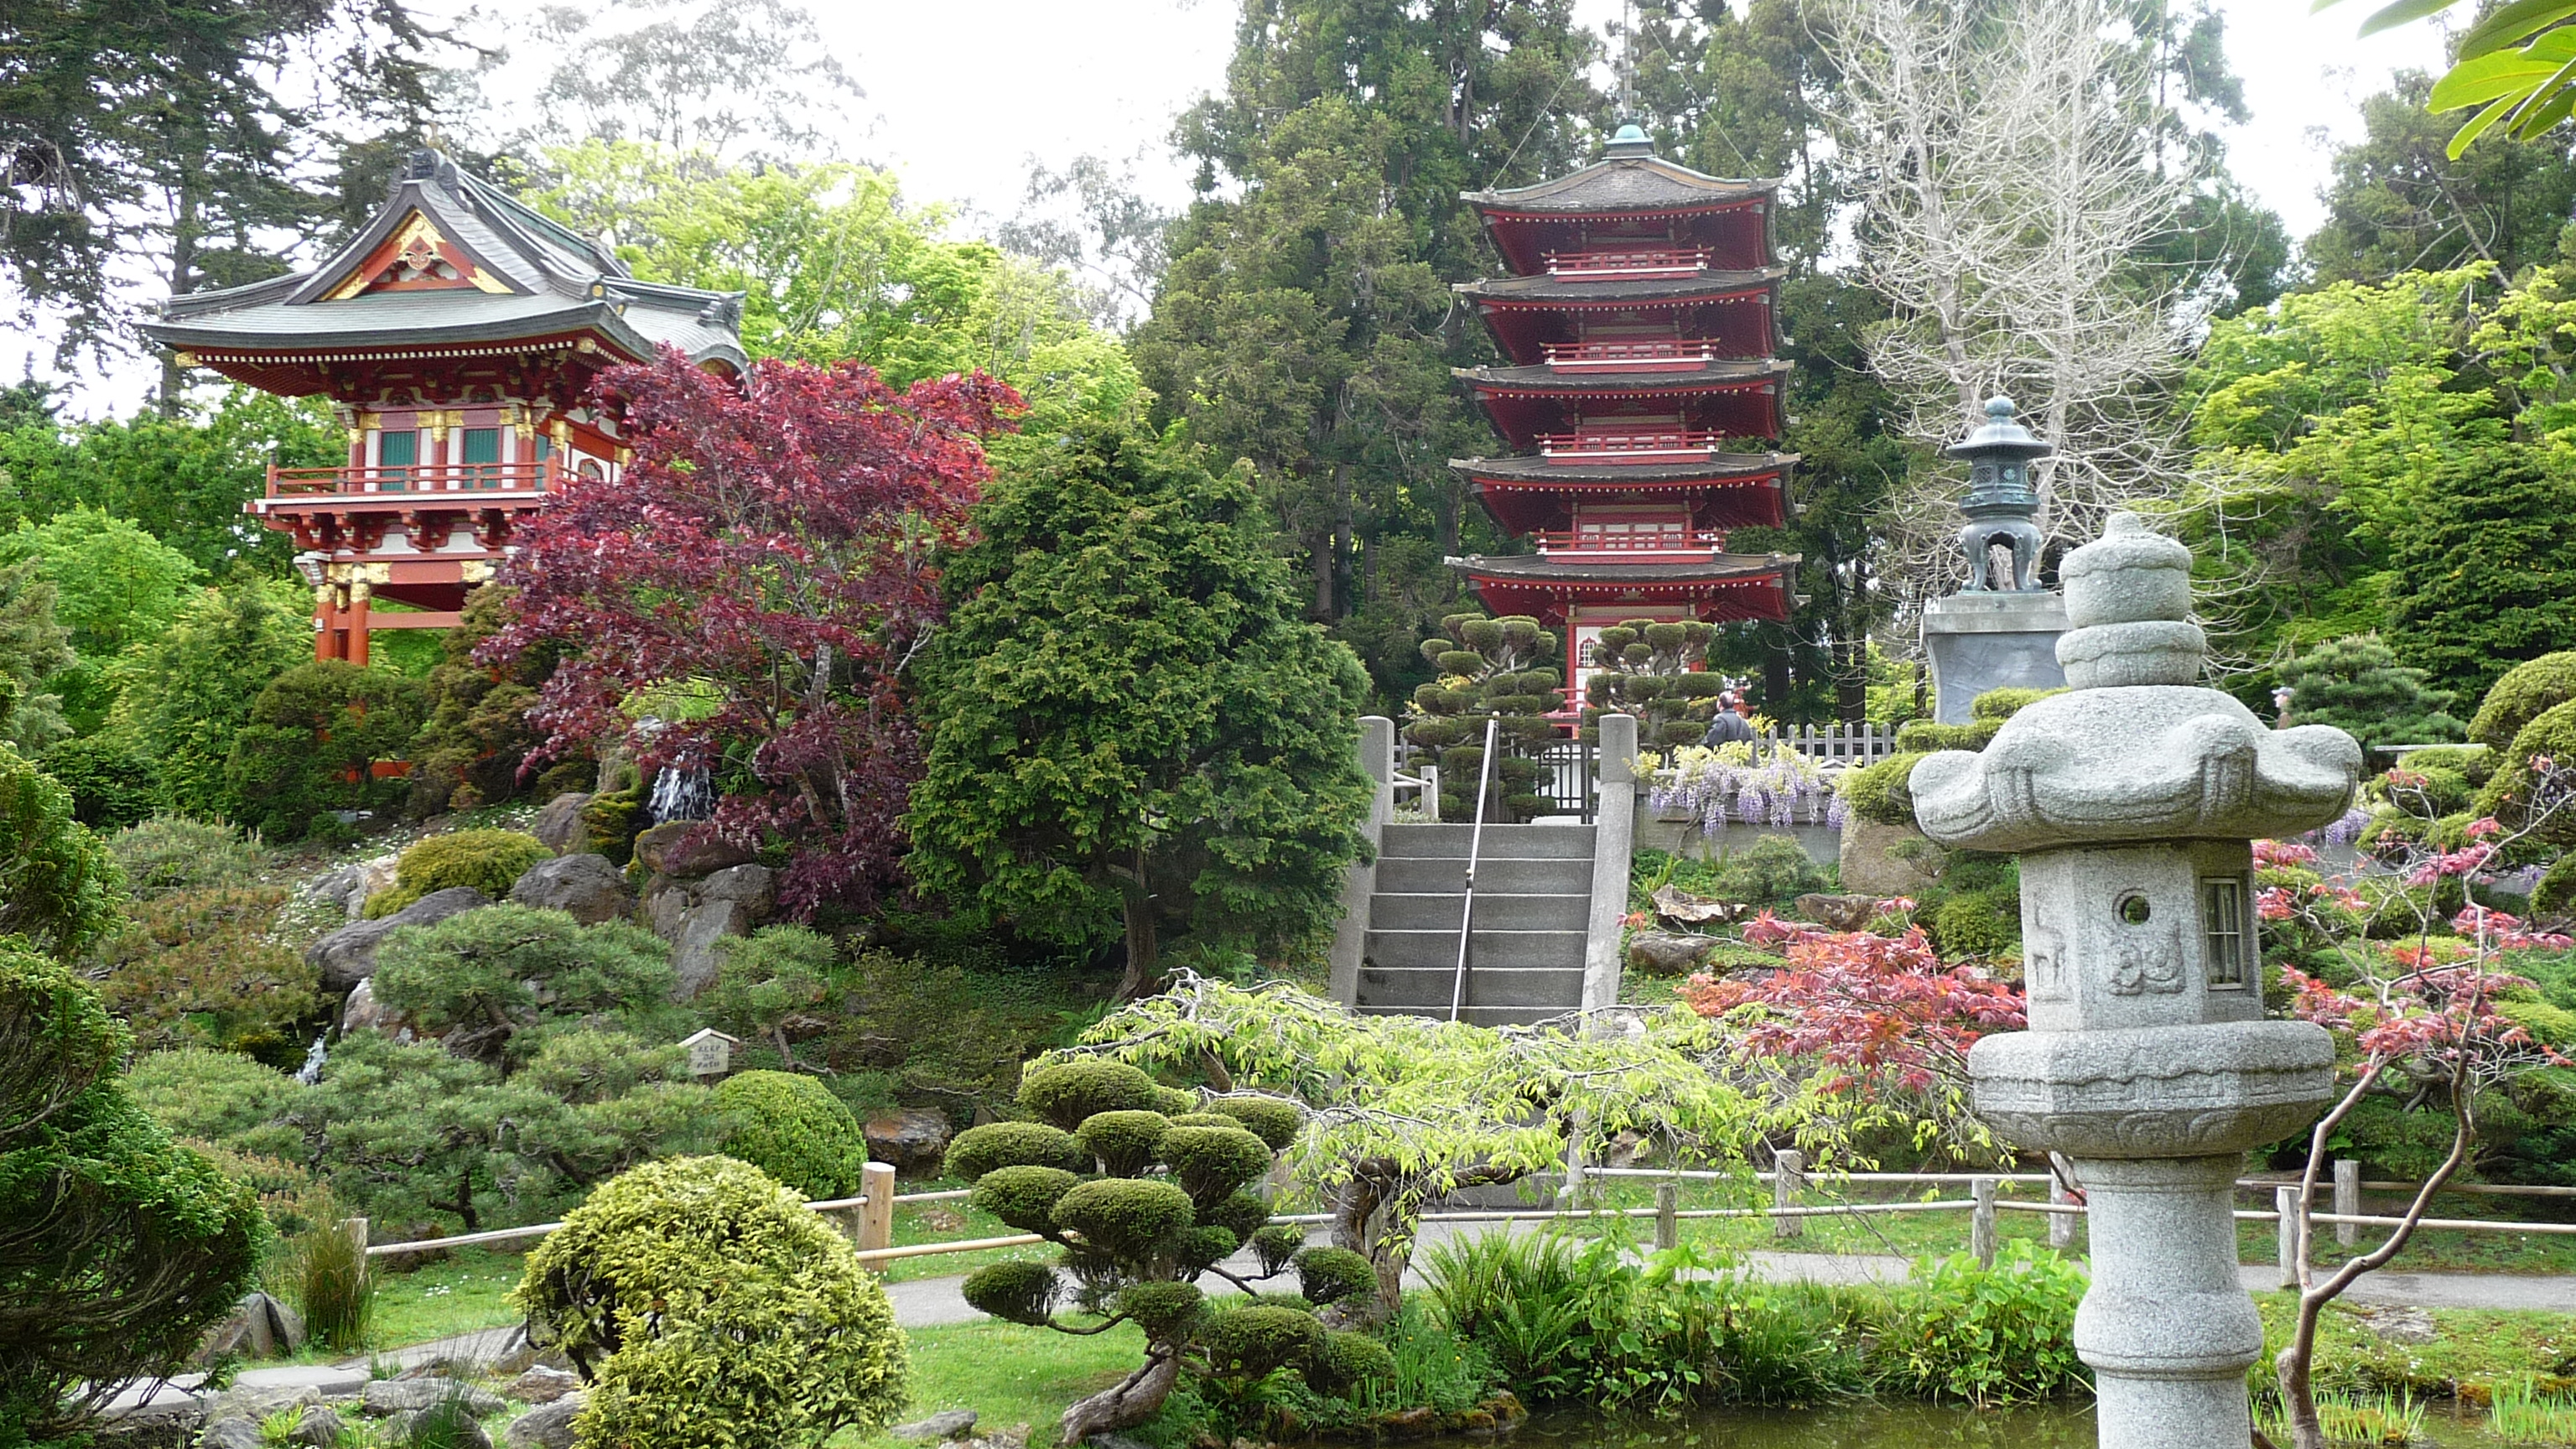 Golden Gate Park And The Japanese Tea Garden Chaumai S Weblog